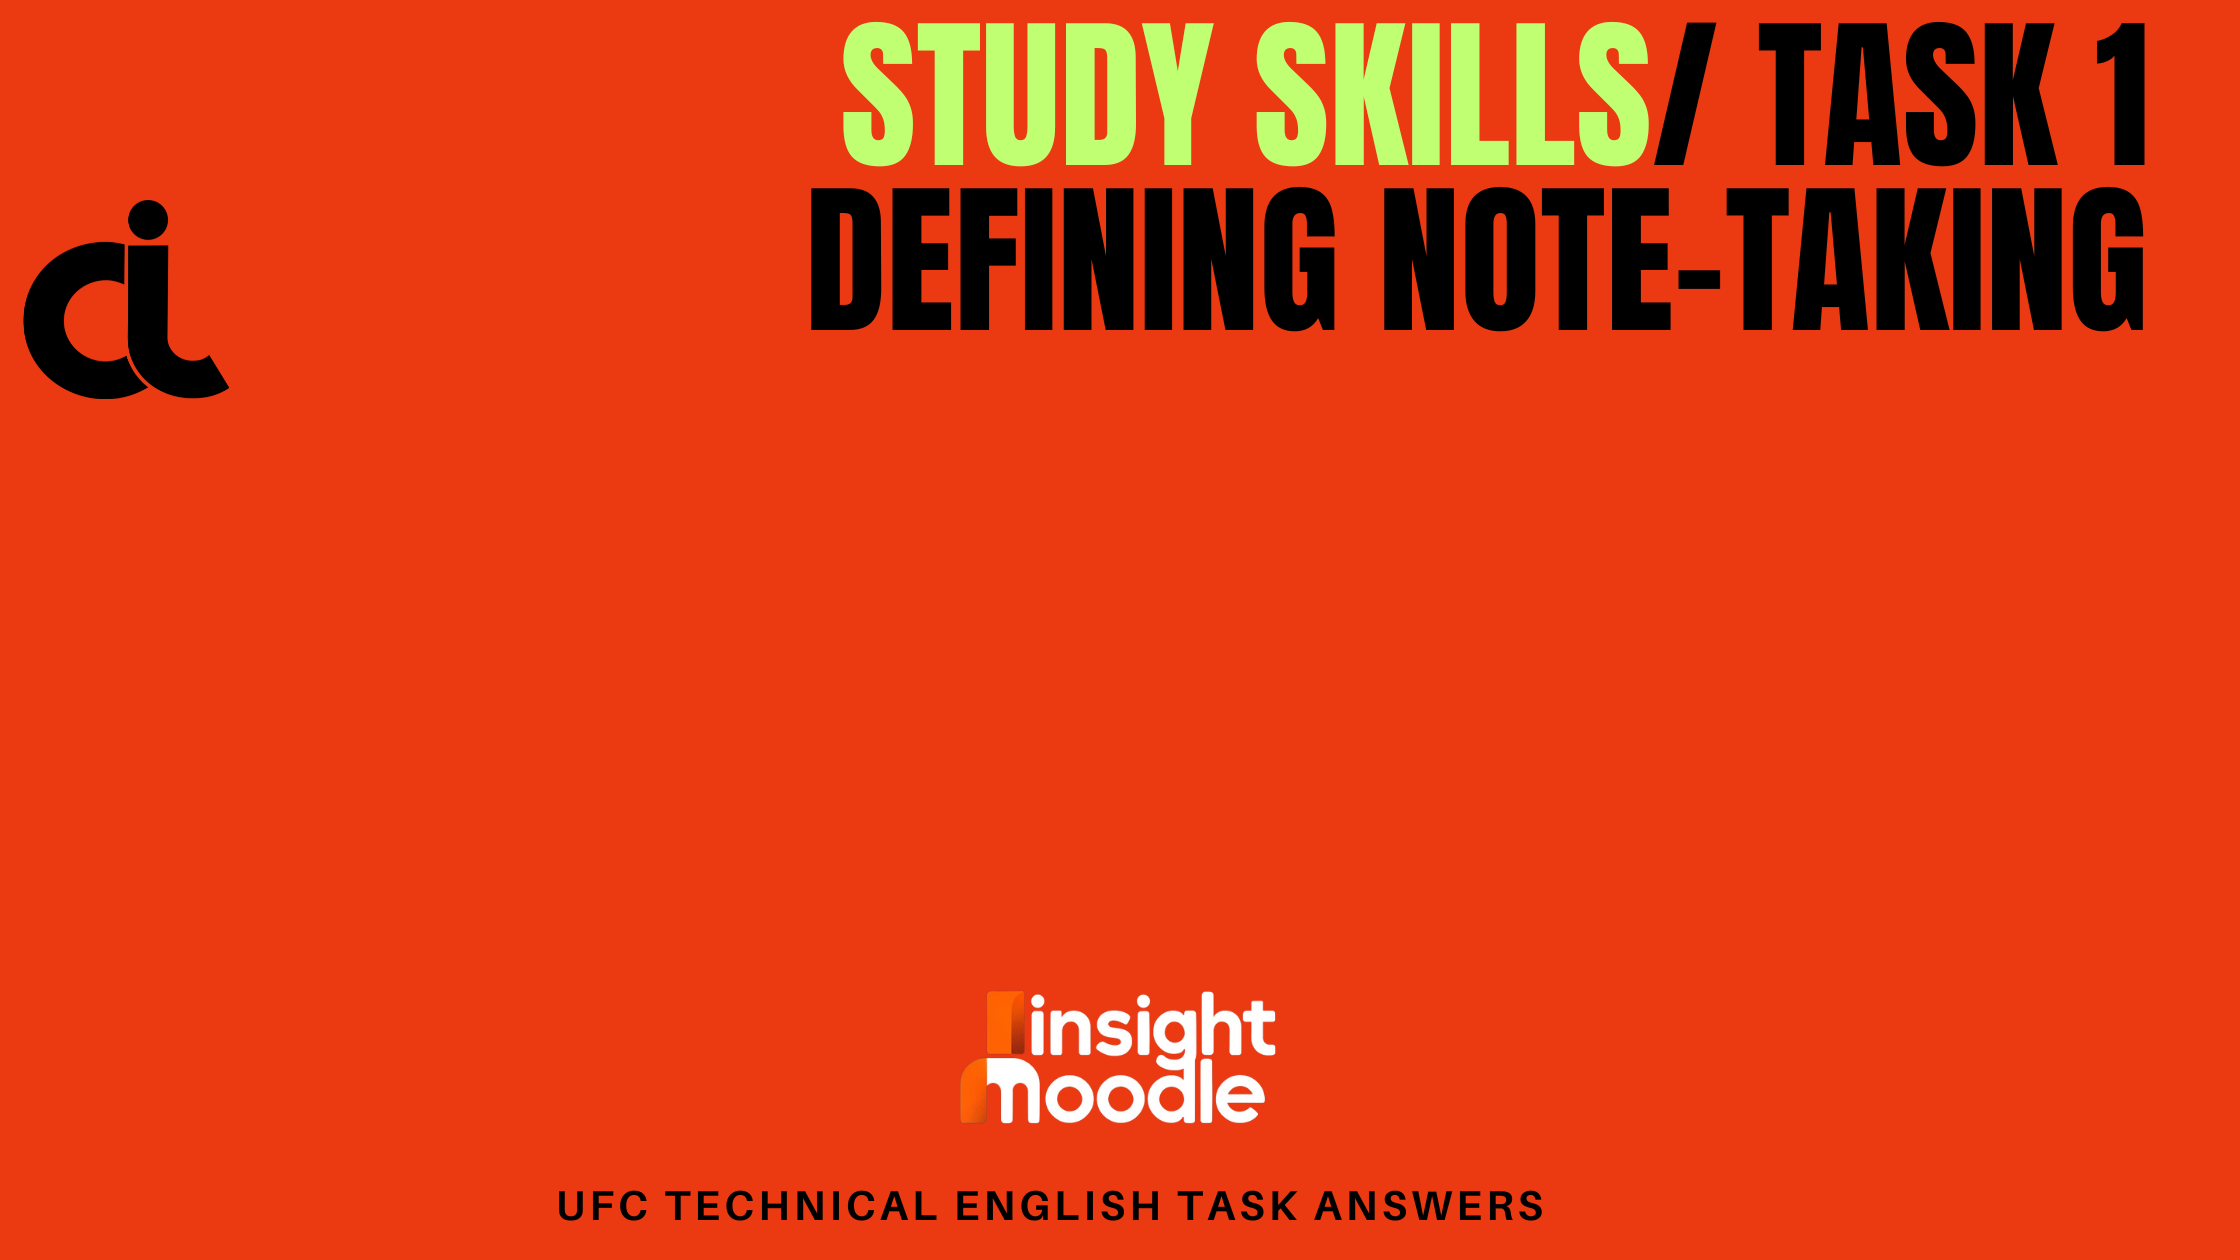 study skills/ task 1 Defining Note-taking